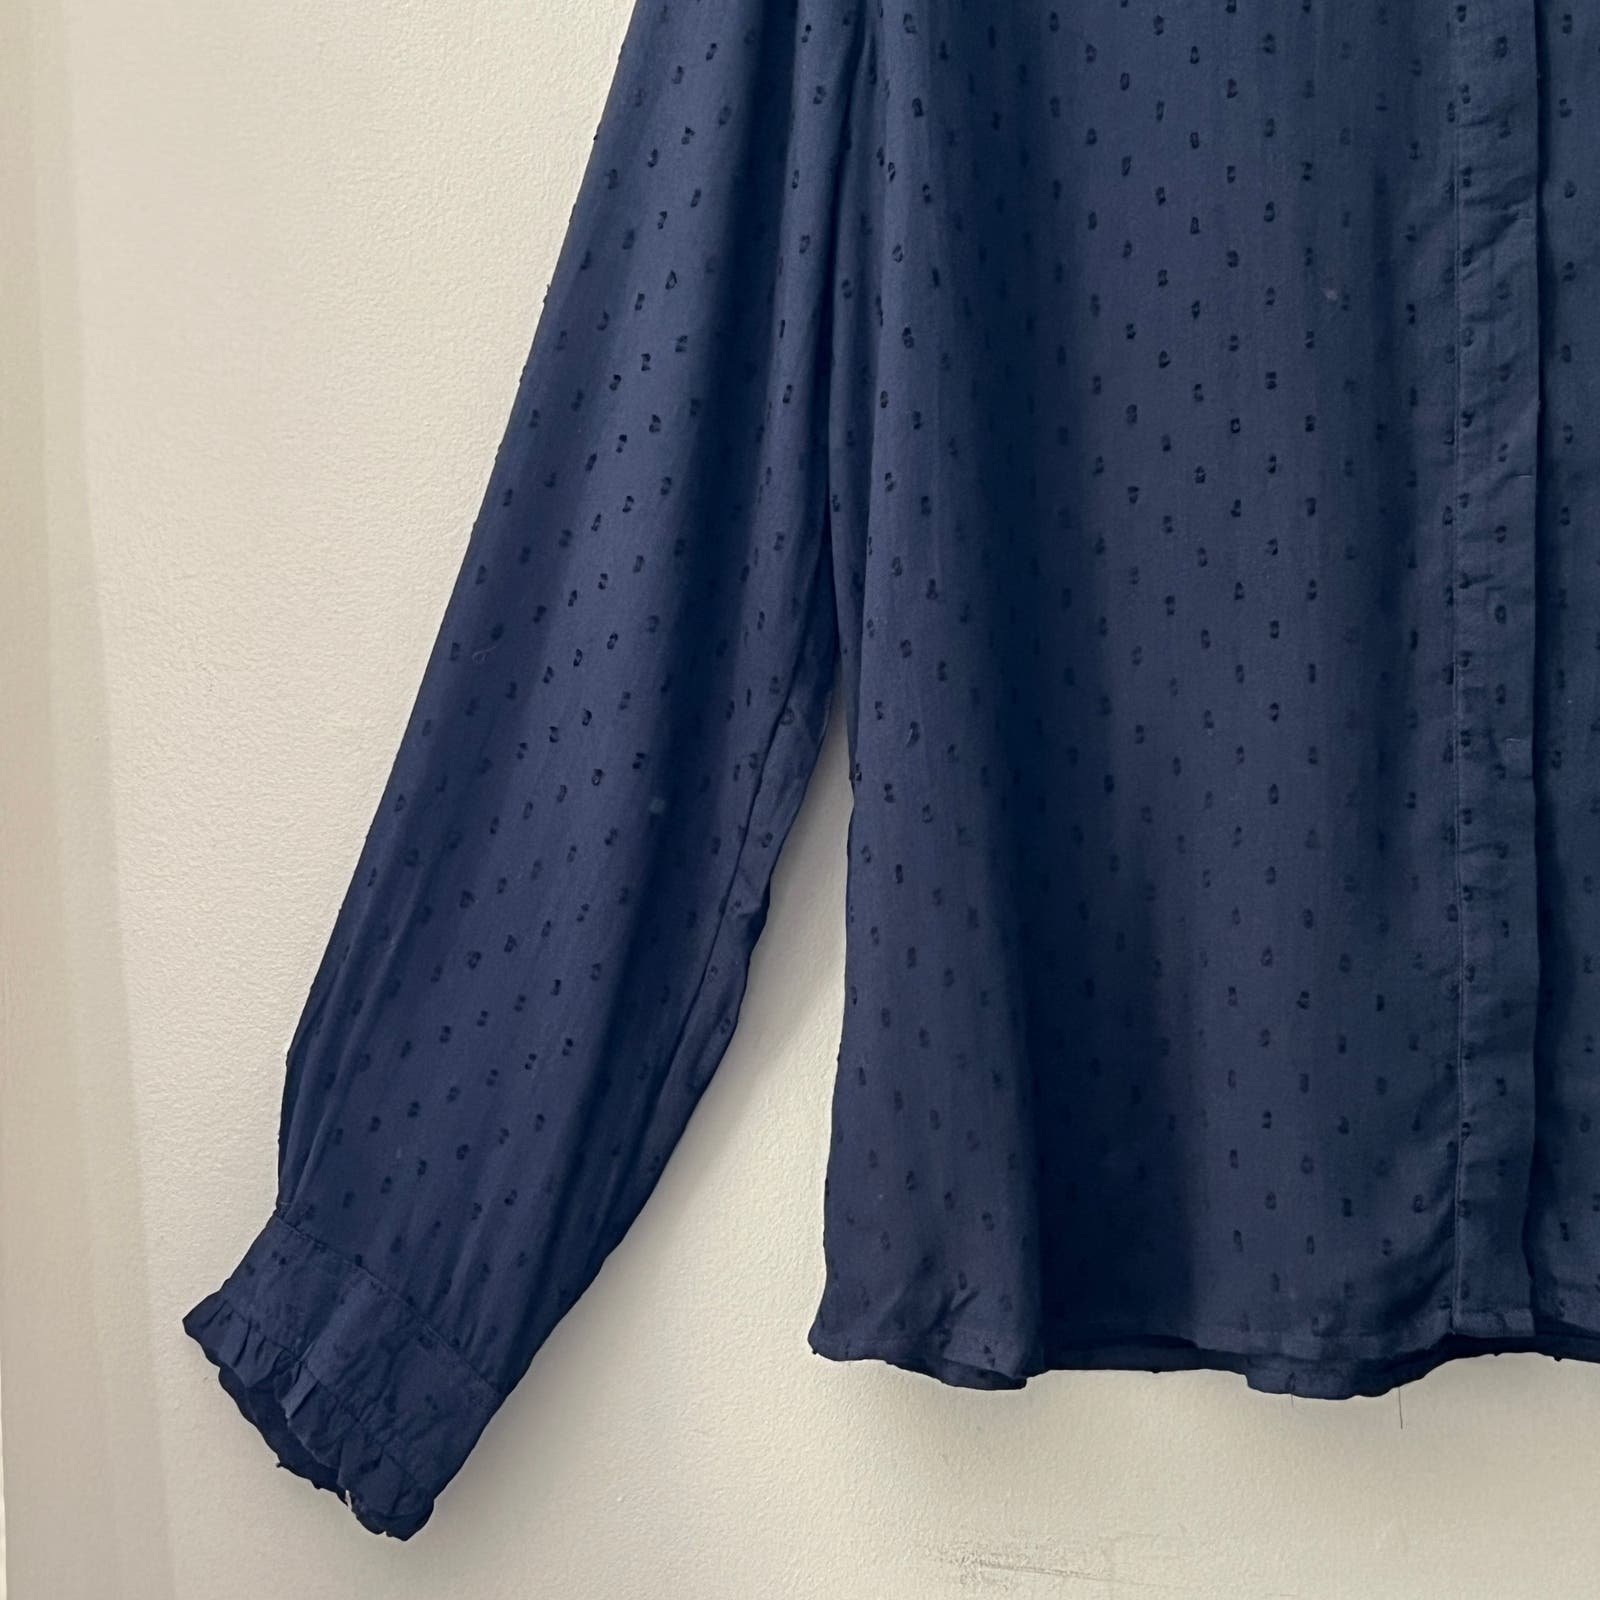 Elegant Loft Long Sleeve Button Down Ruffle Neck Dotted Shirt Size XL Blue m0kGEHNlR Zero Profit 